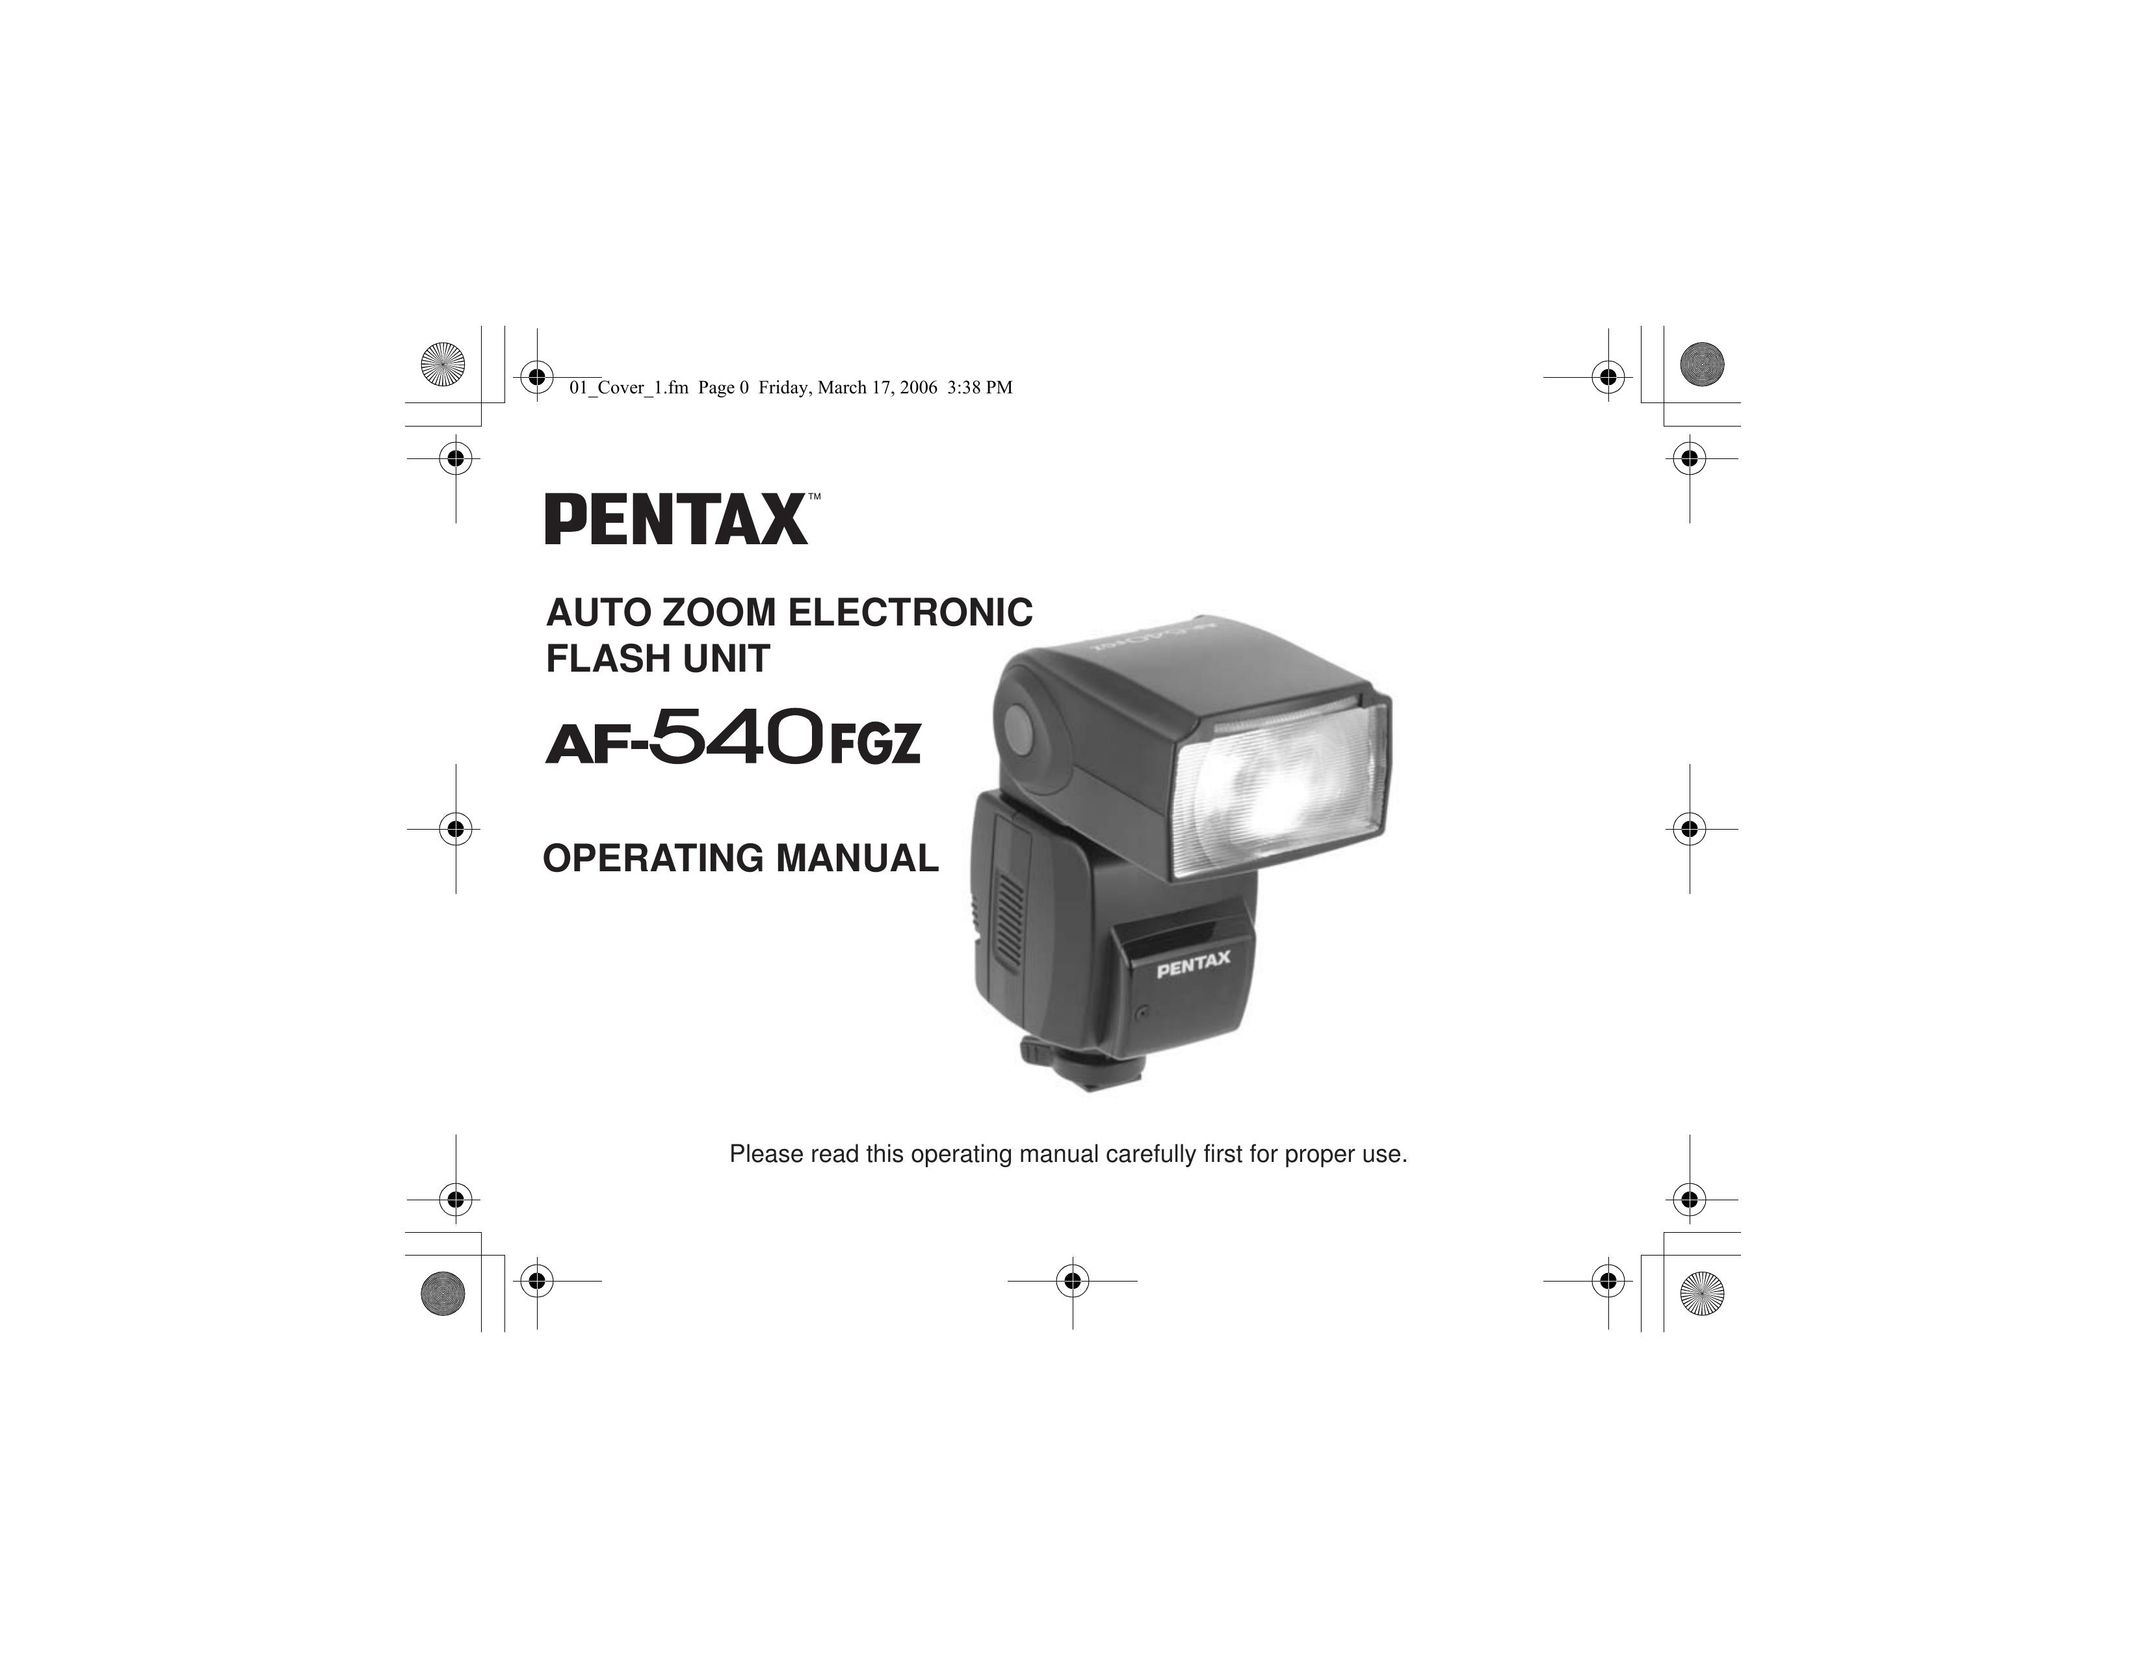 Pentax AF540FGZ Home Safety Product User Manual